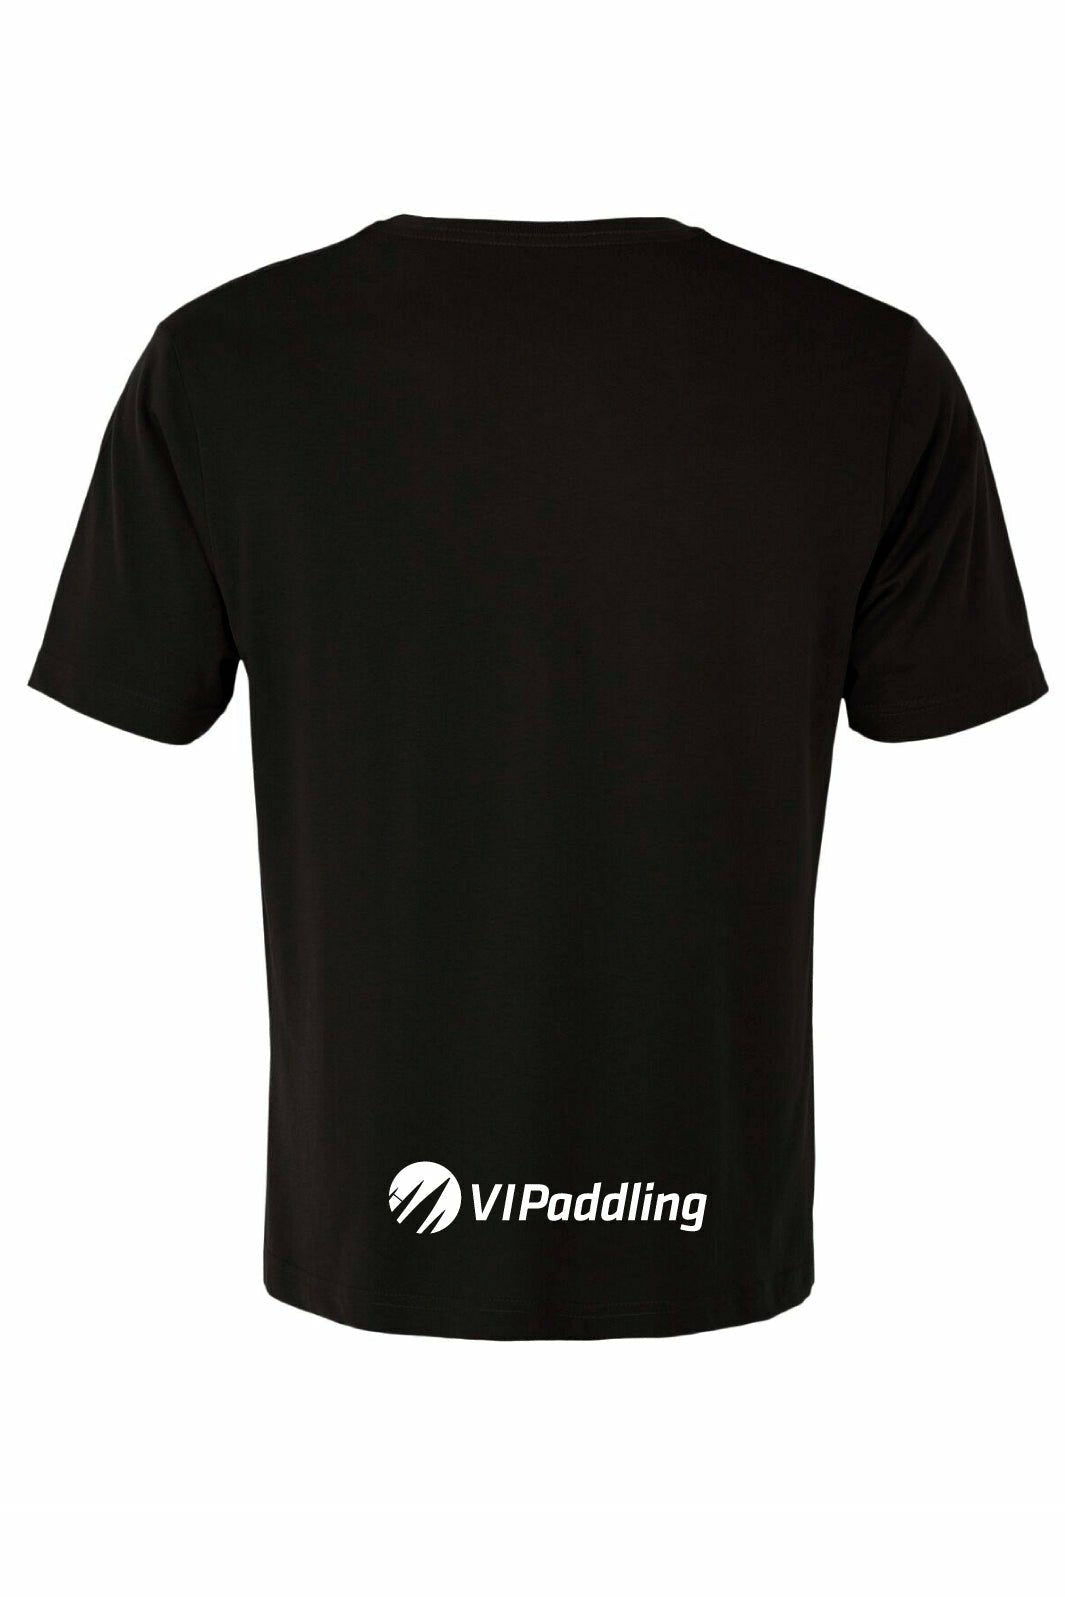 VI Paddling Gorging Dragons Unisex T-shirt (Option 1) - Oddball Workshop